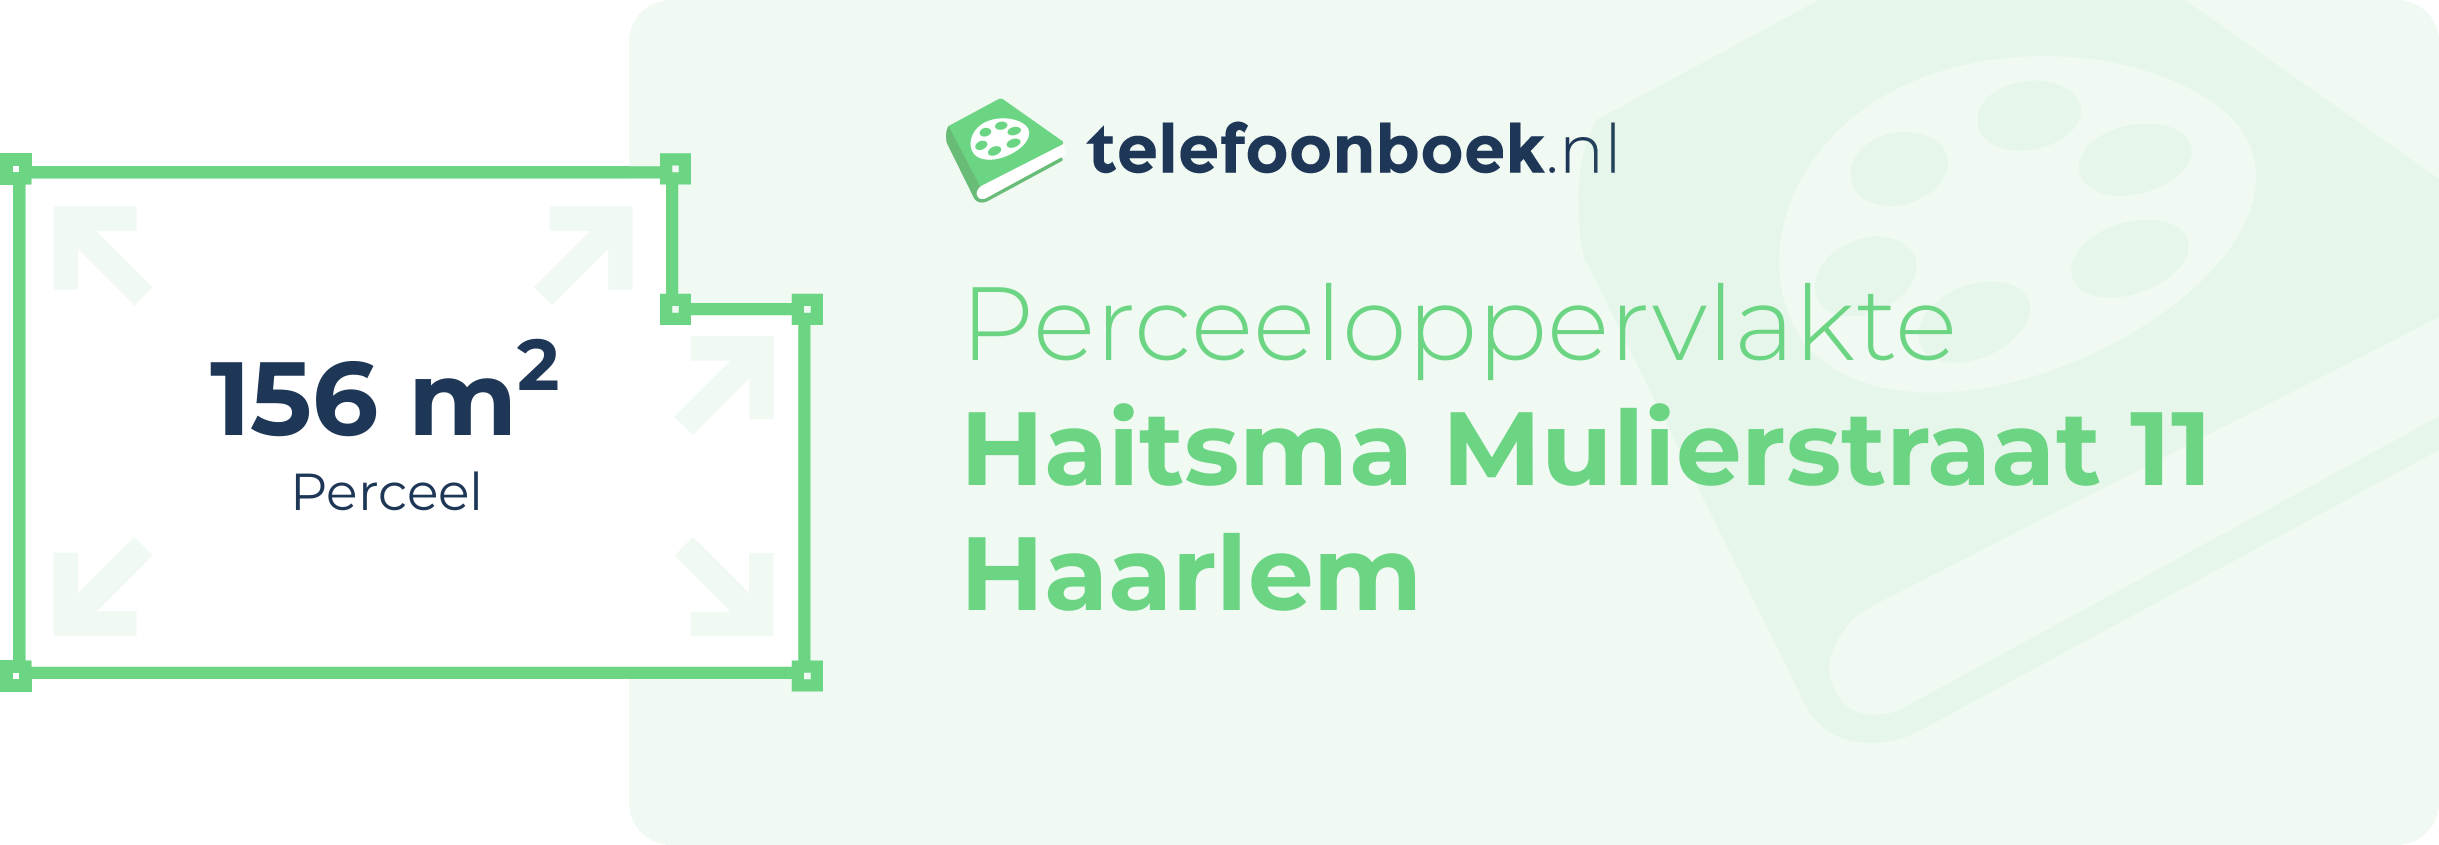 Perceeloppervlakte Haitsma Mulierstraat 11 Haarlem